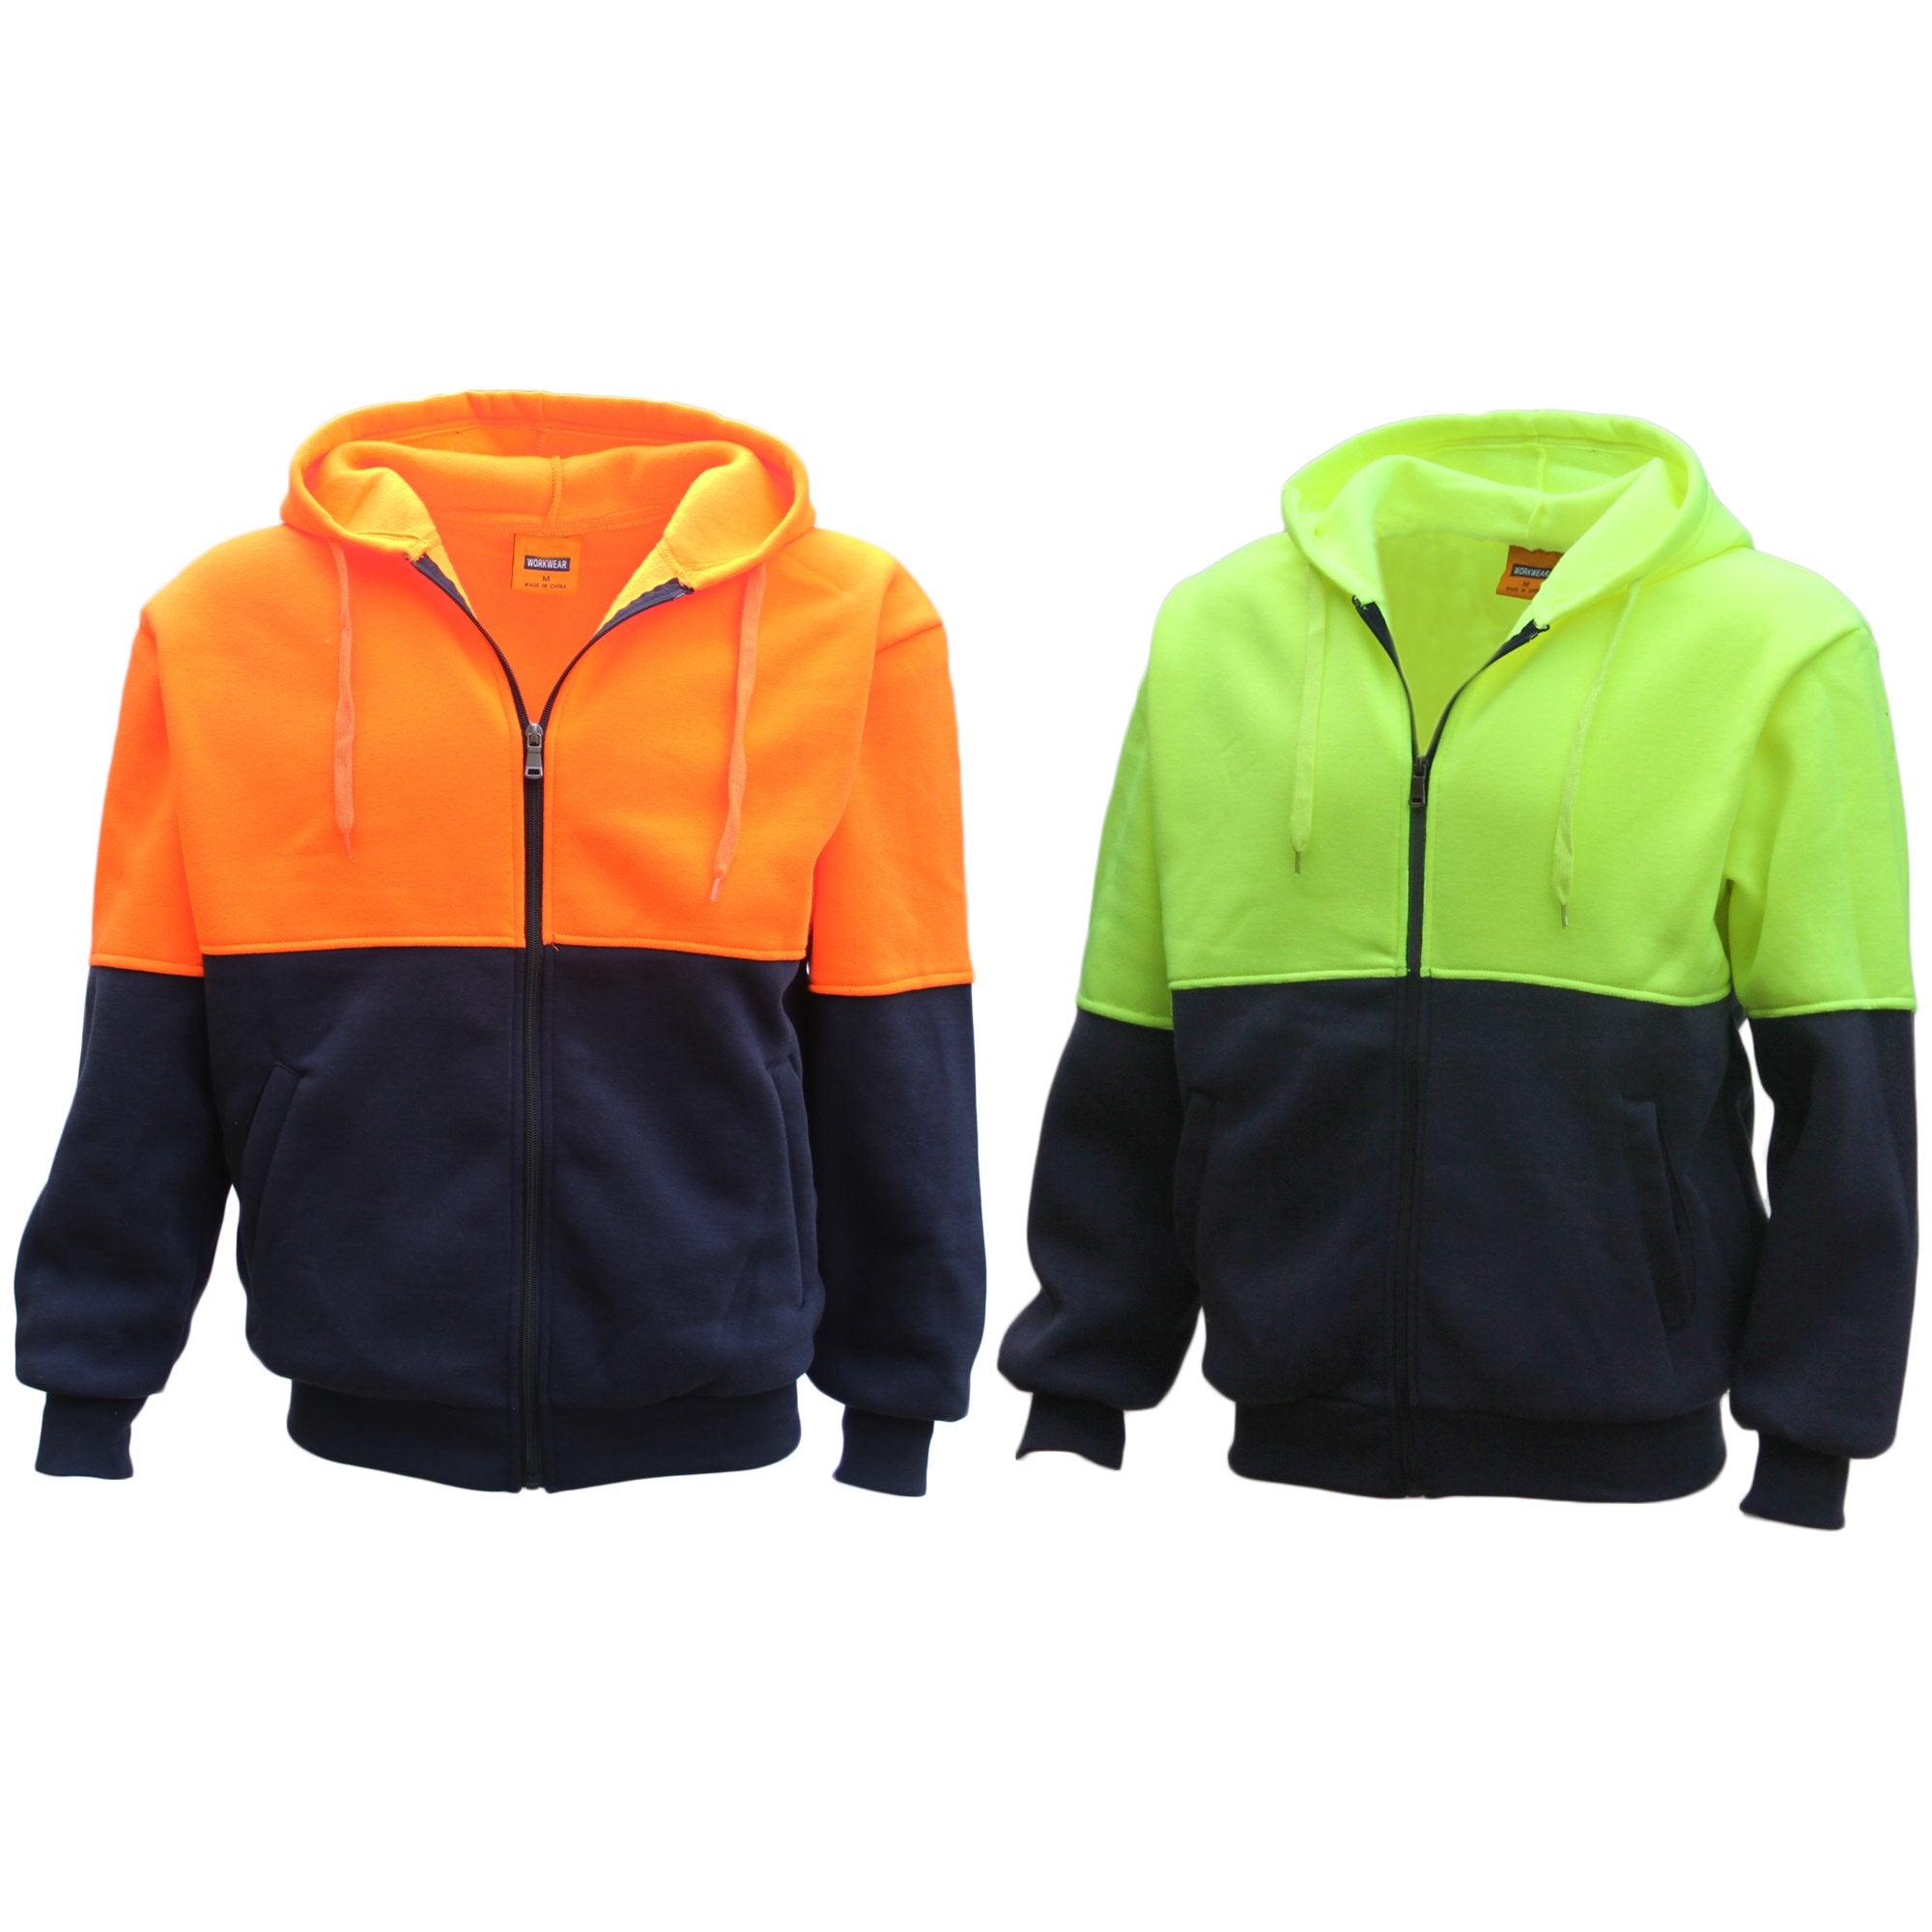 HI VIS Full Zip Fleece-lined Fleecy Hoodie Jumper Safety Workwear Pocket Jacket - Zmart Australia